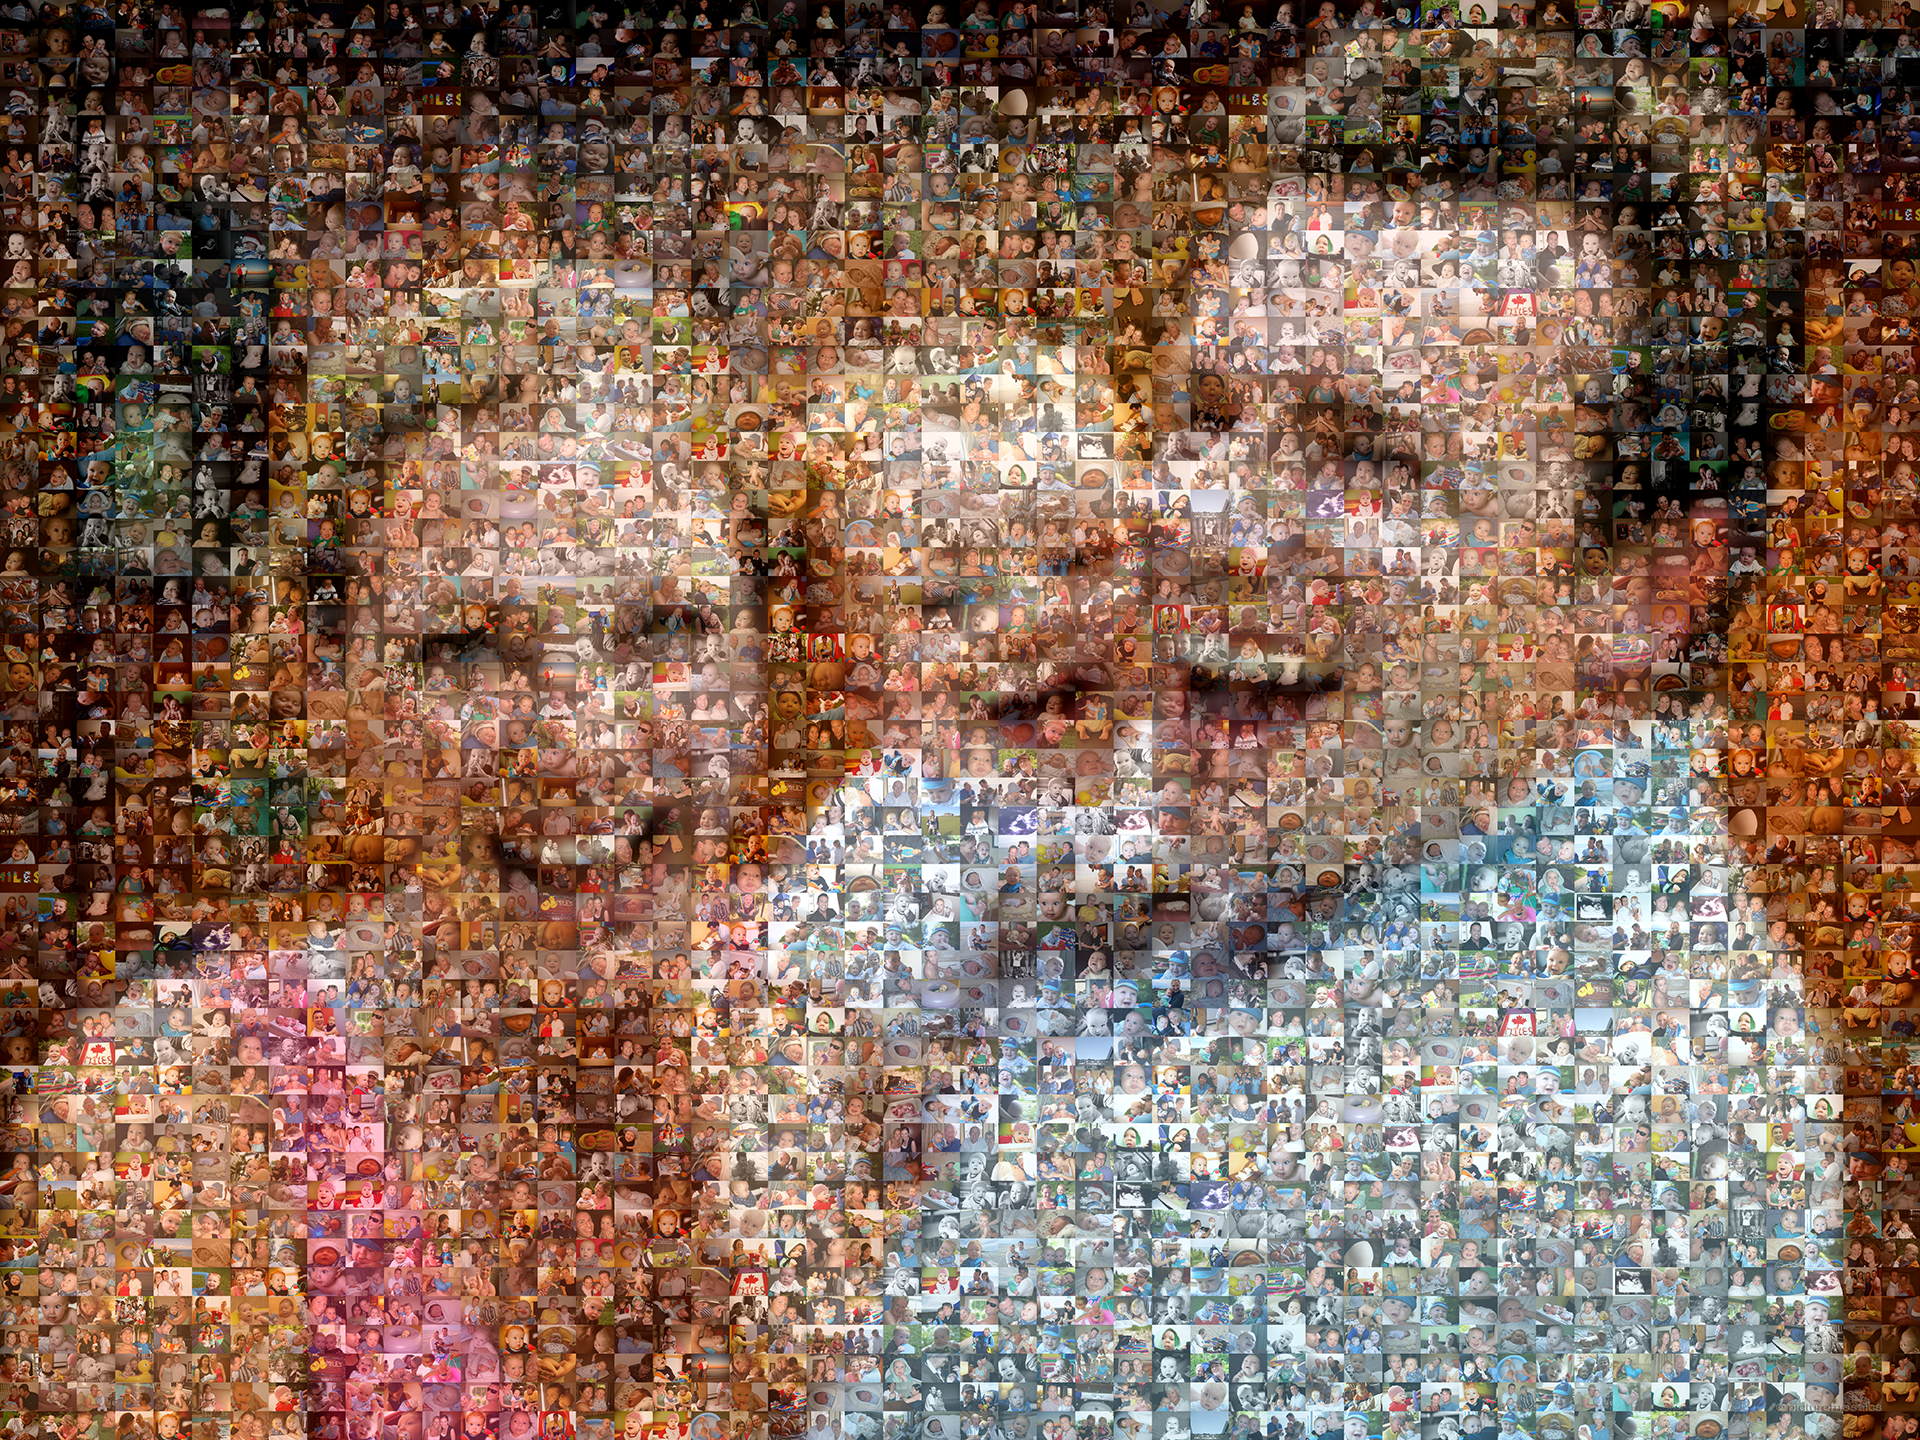 photo mosaic created using 582 family photos